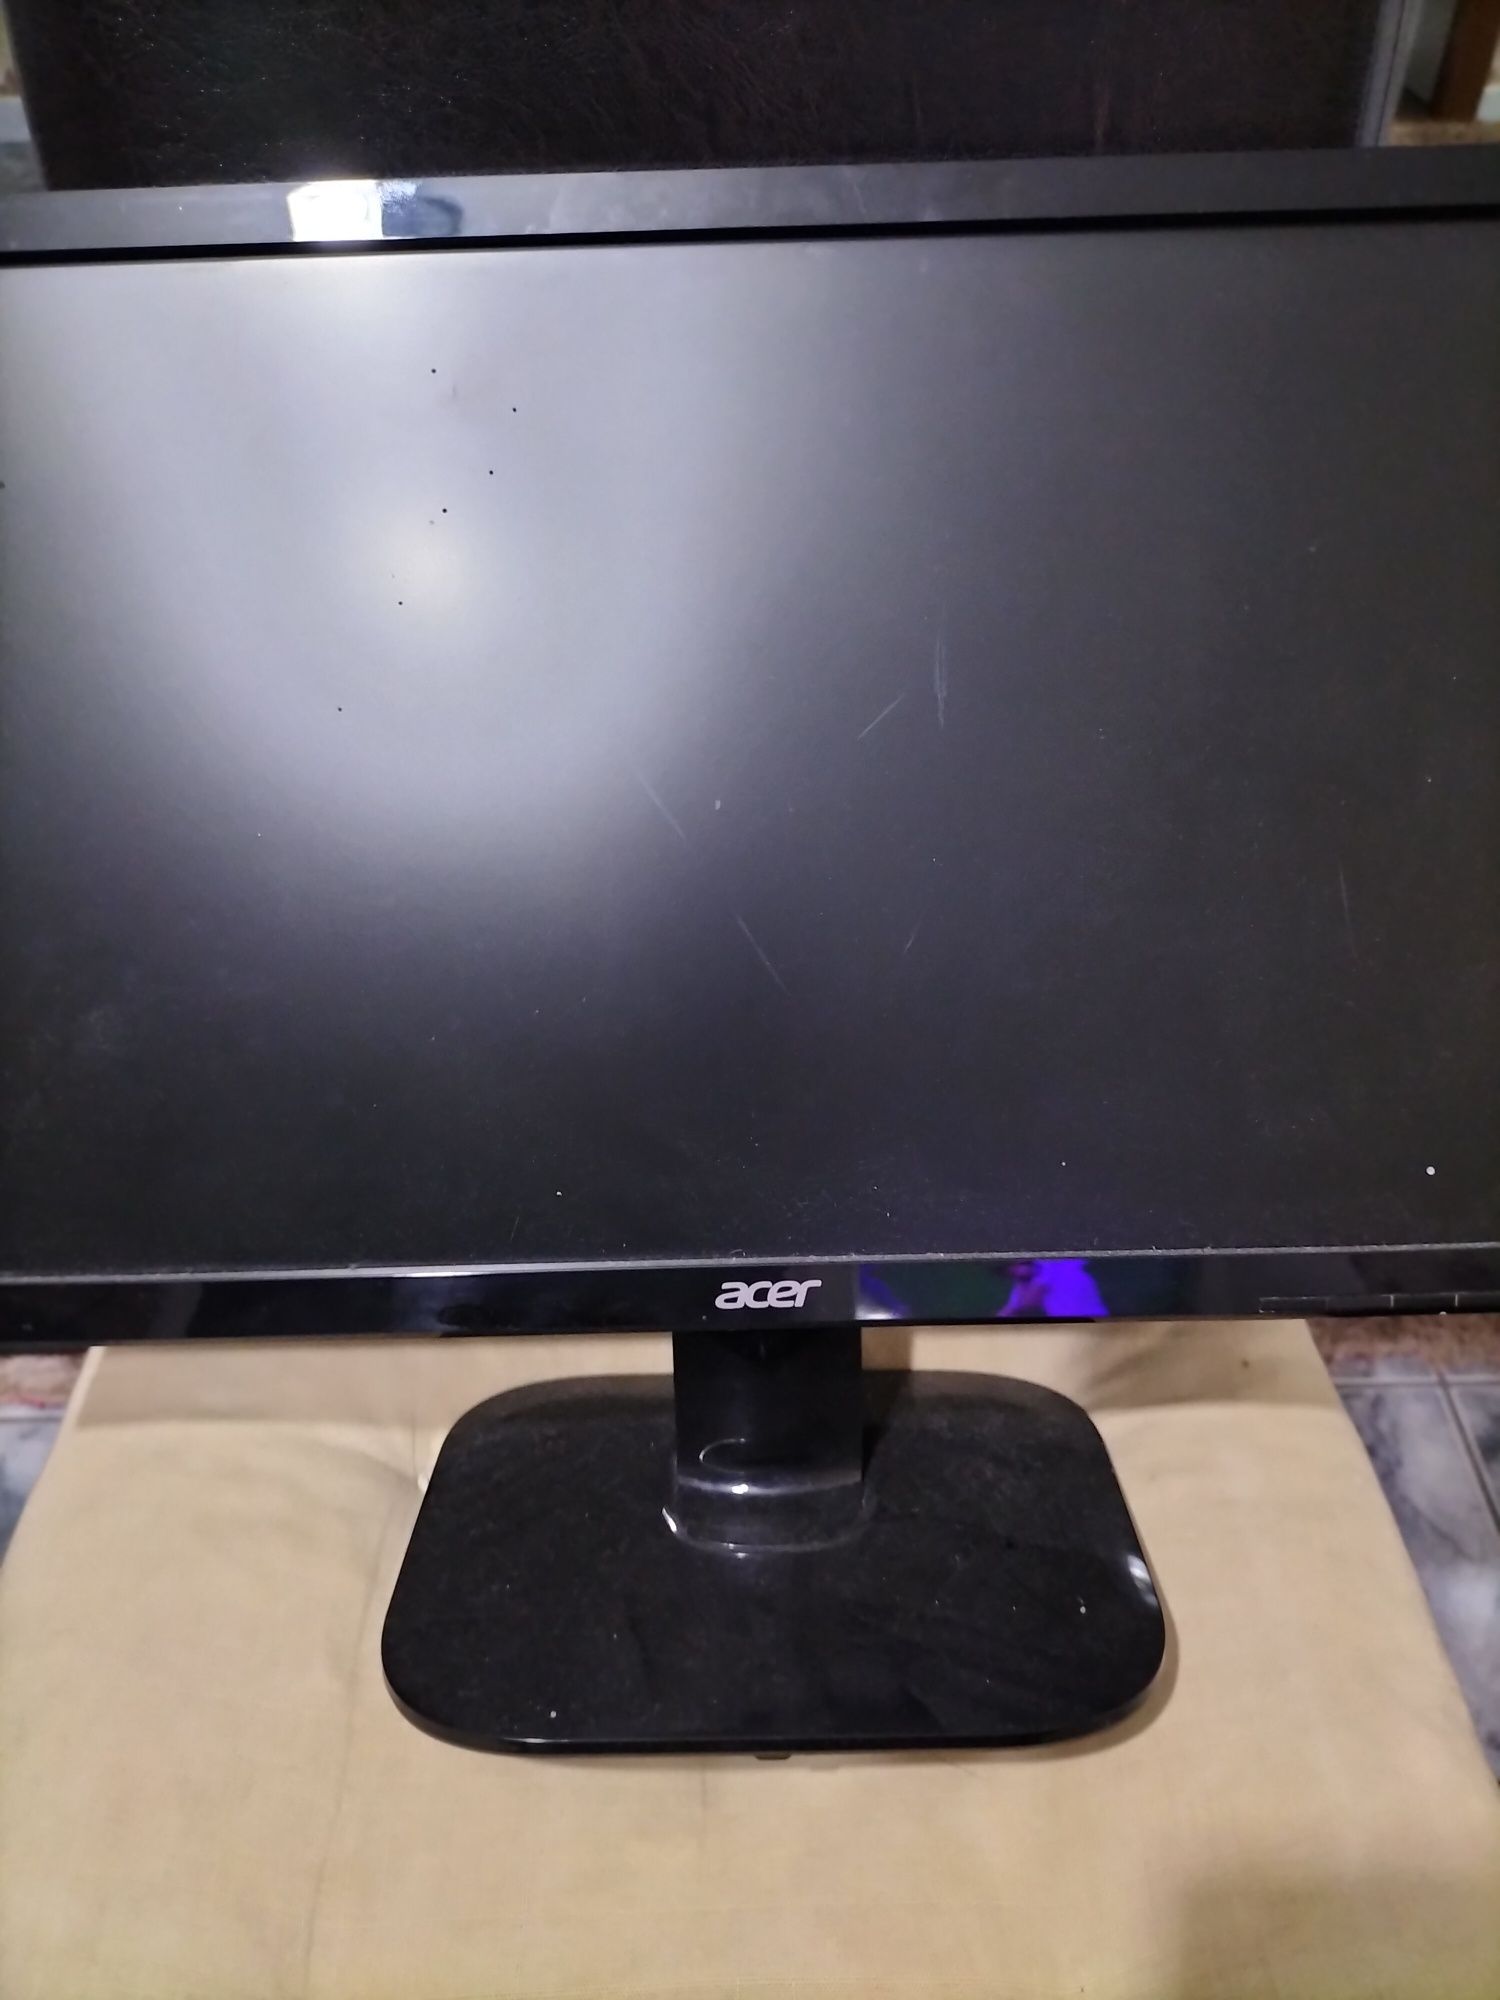 Calculator gaming cu monitor Acer și tastatură gaming Red dragon